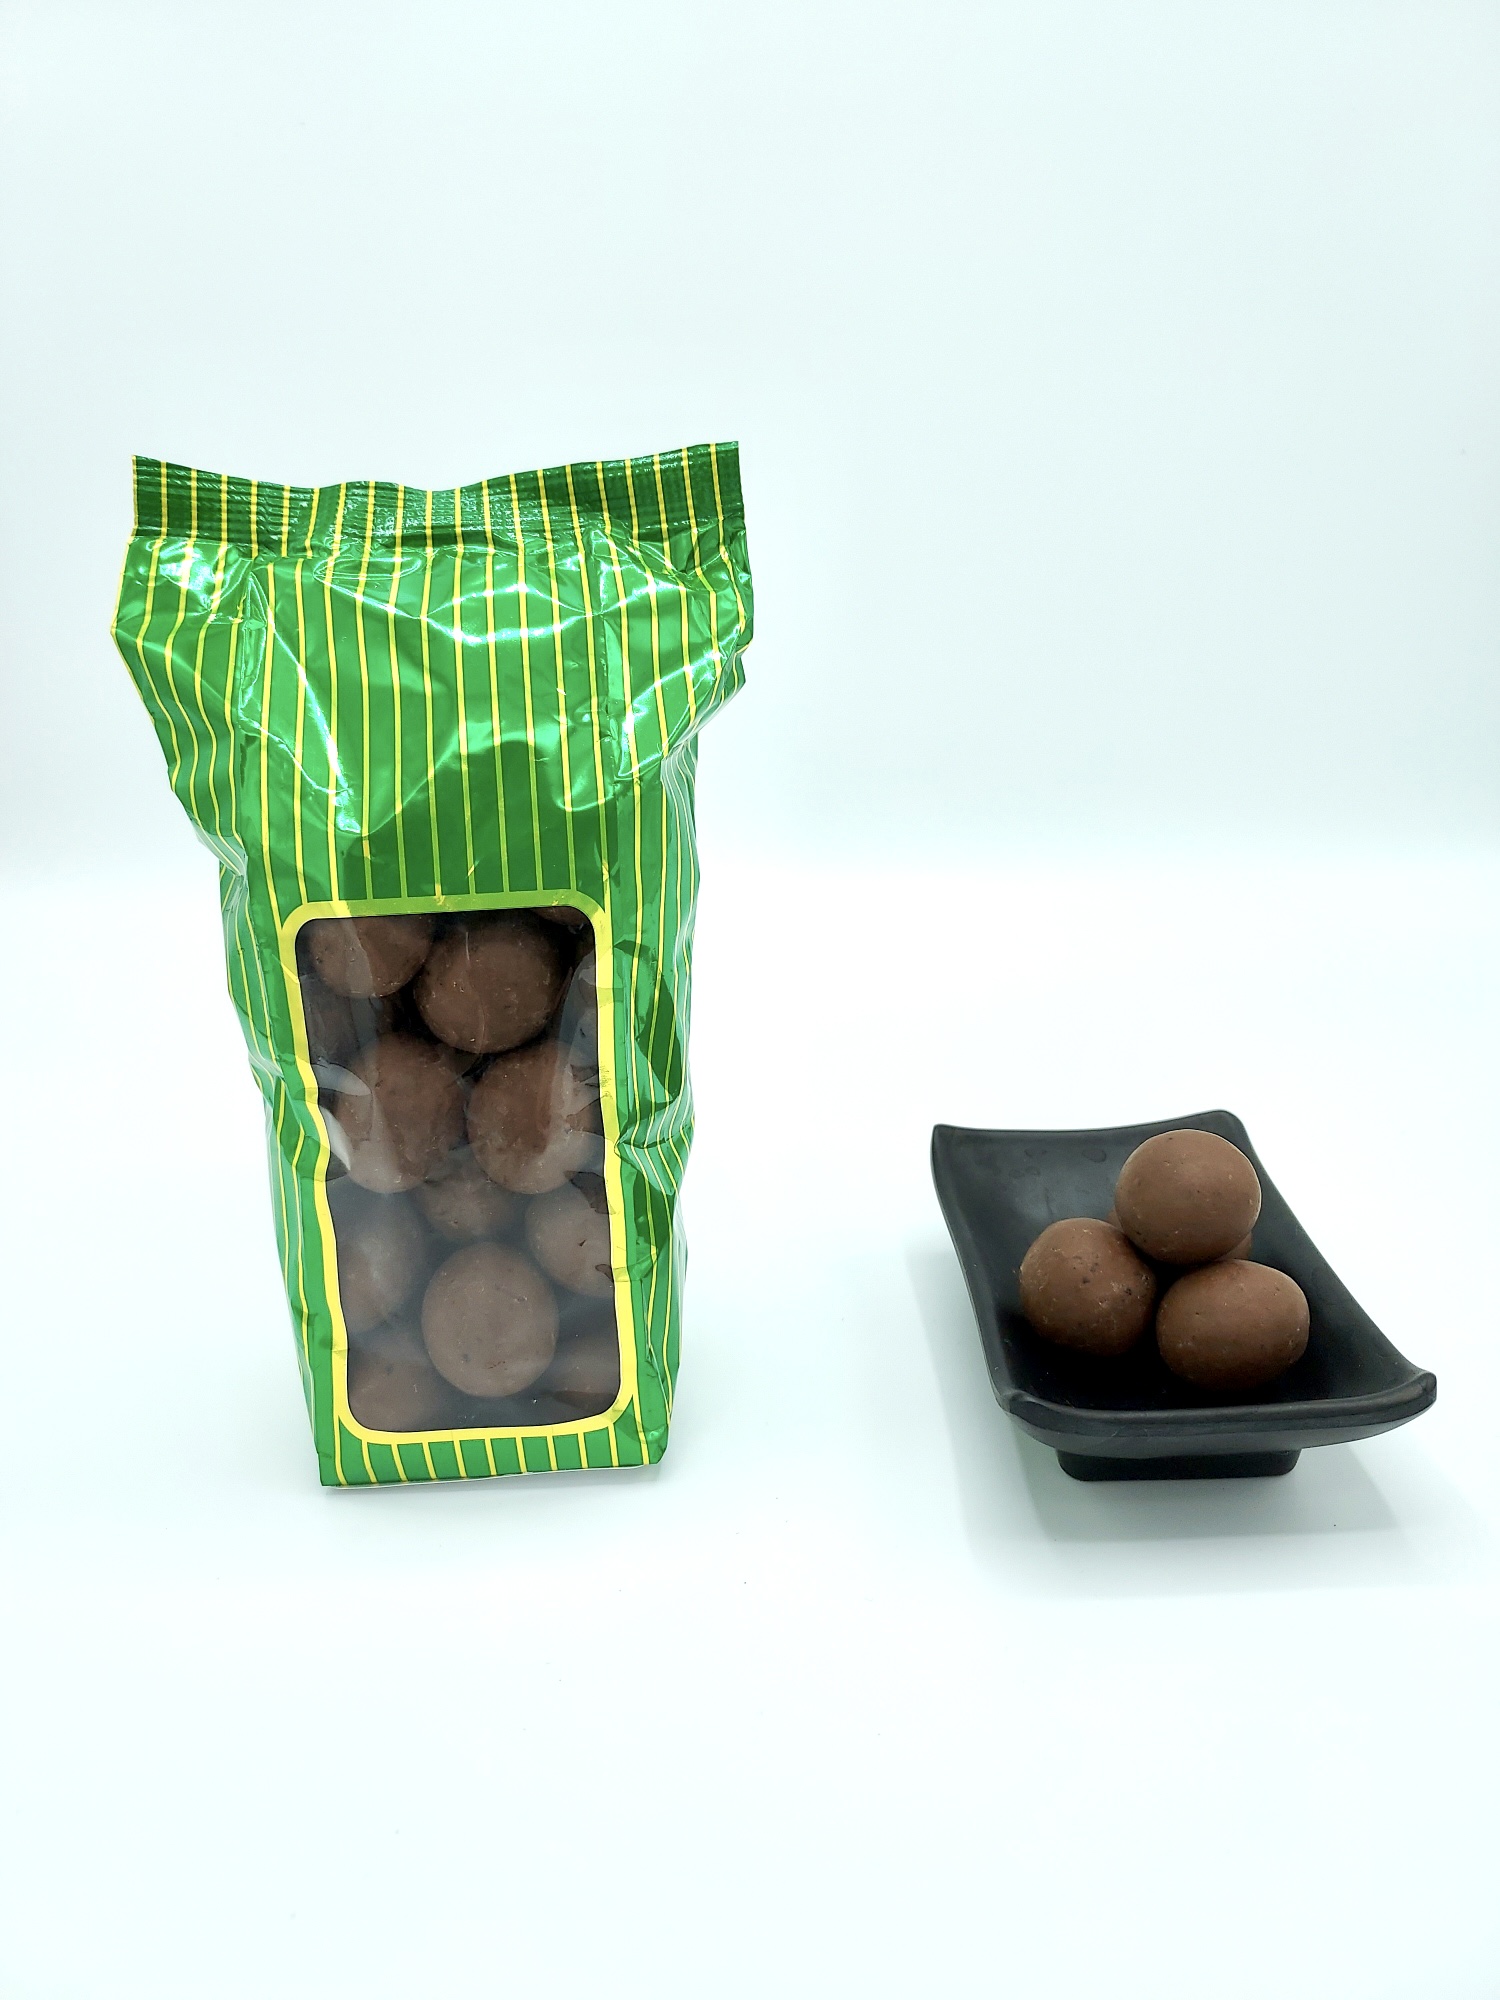 Product Image for Kona Coffee Chocolate Covered Macadamia Nuts